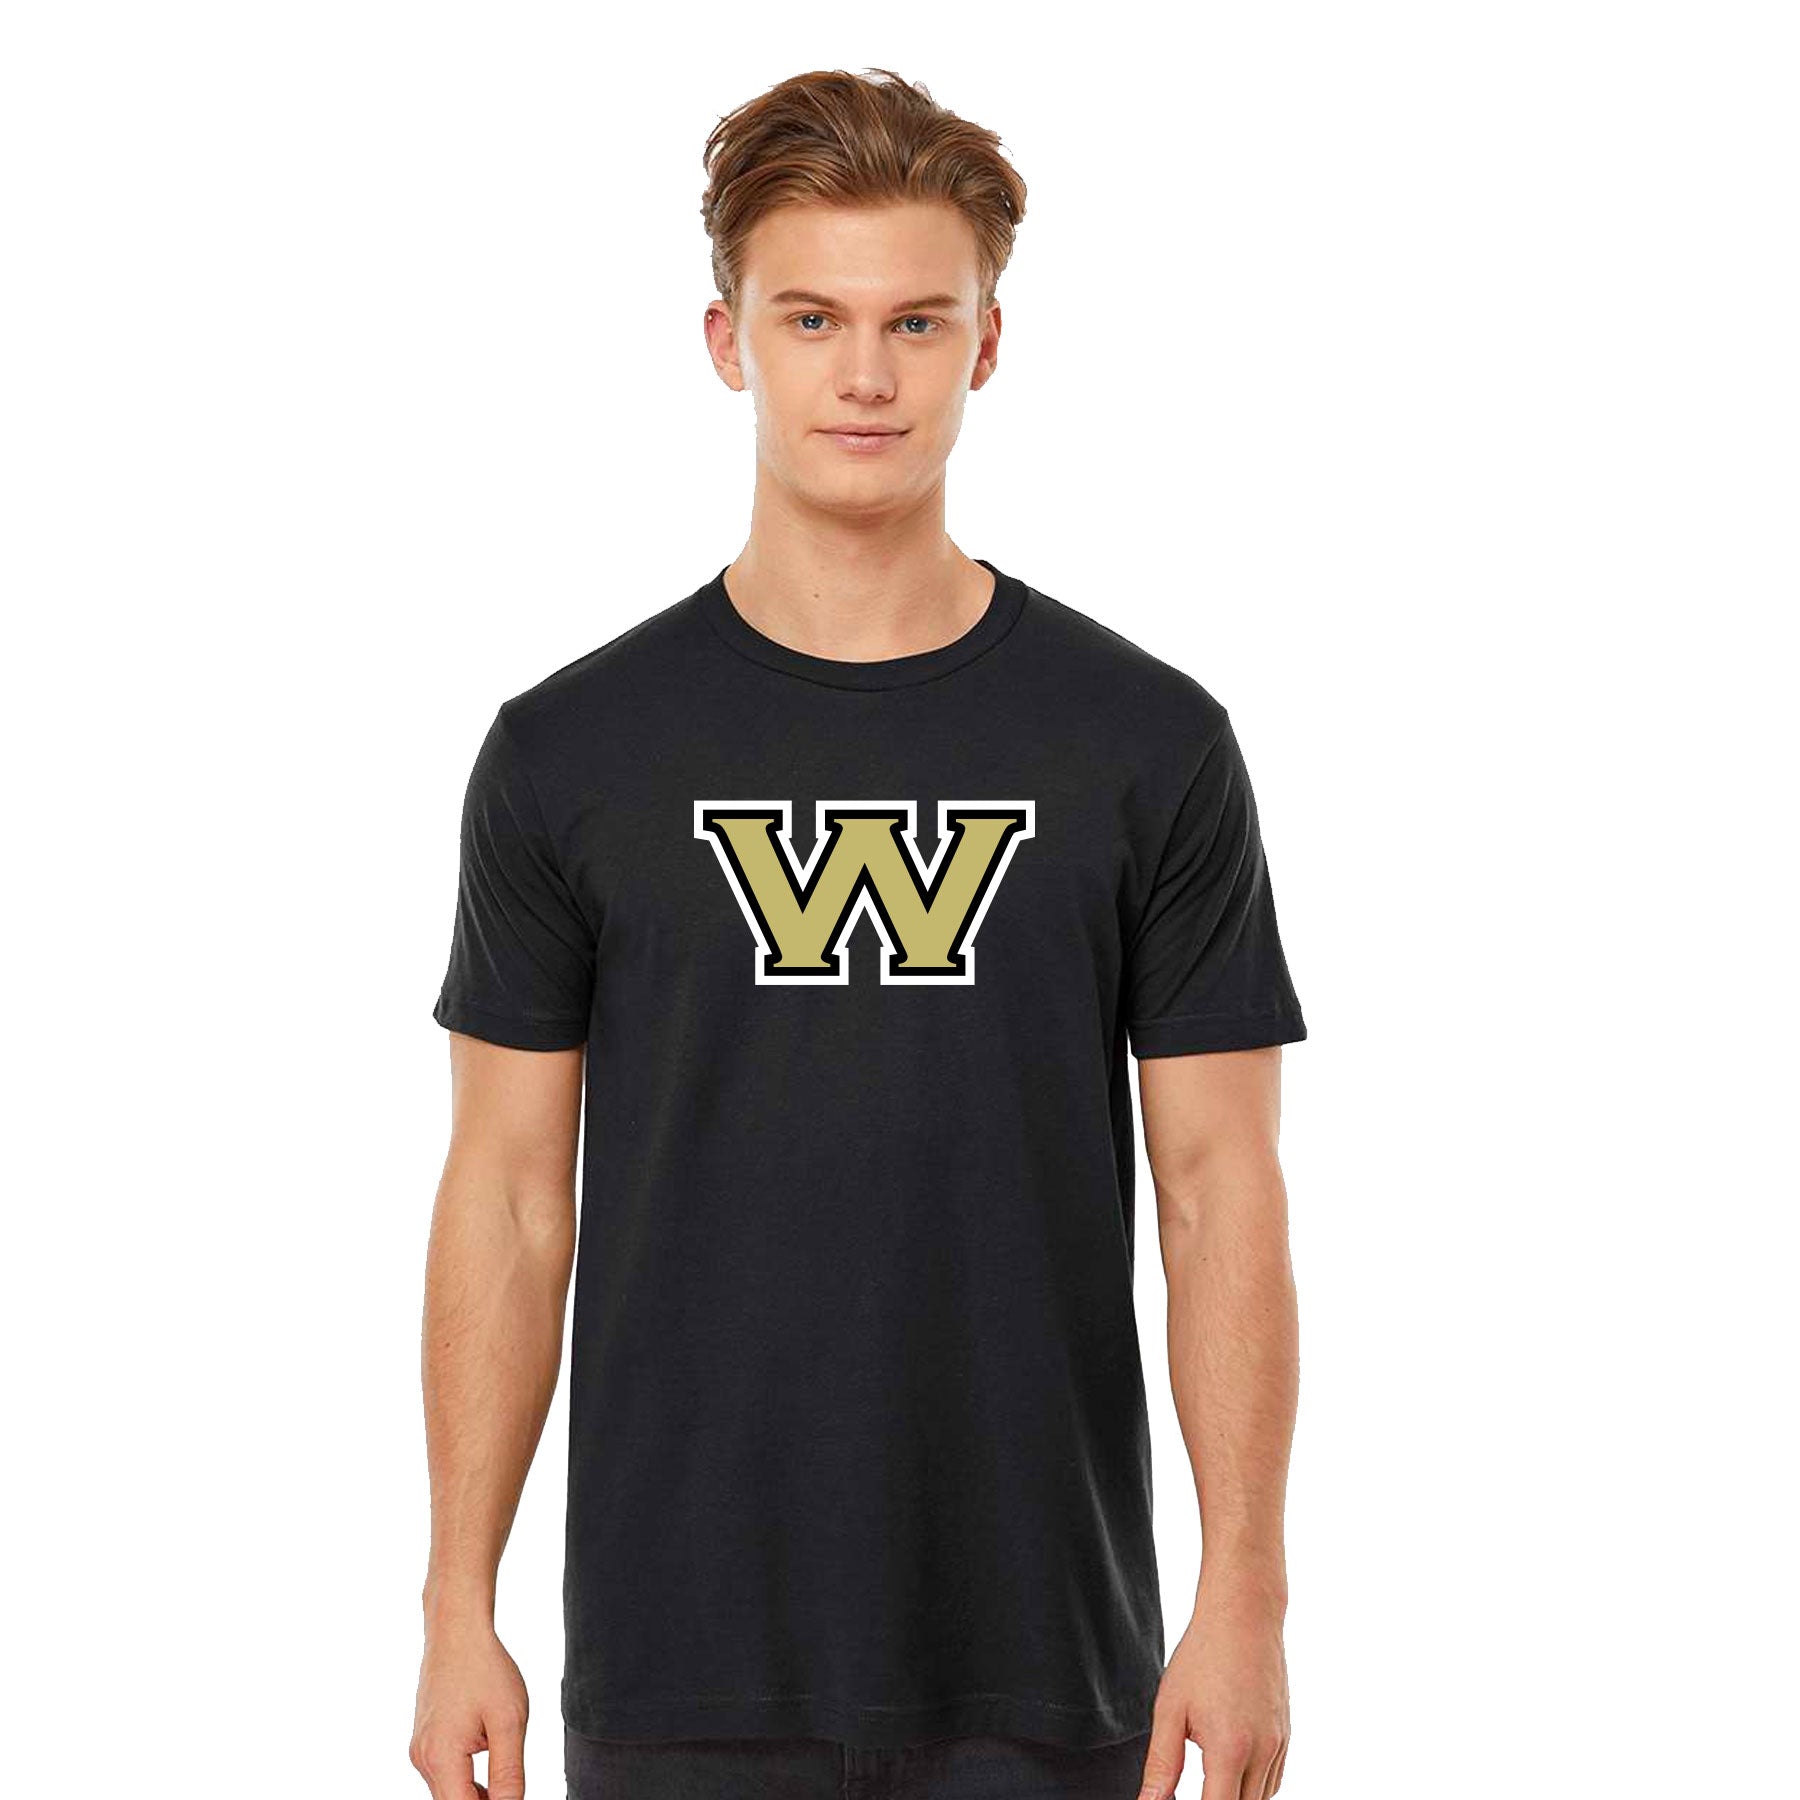 Wolverine Basketball Player T-Shirt